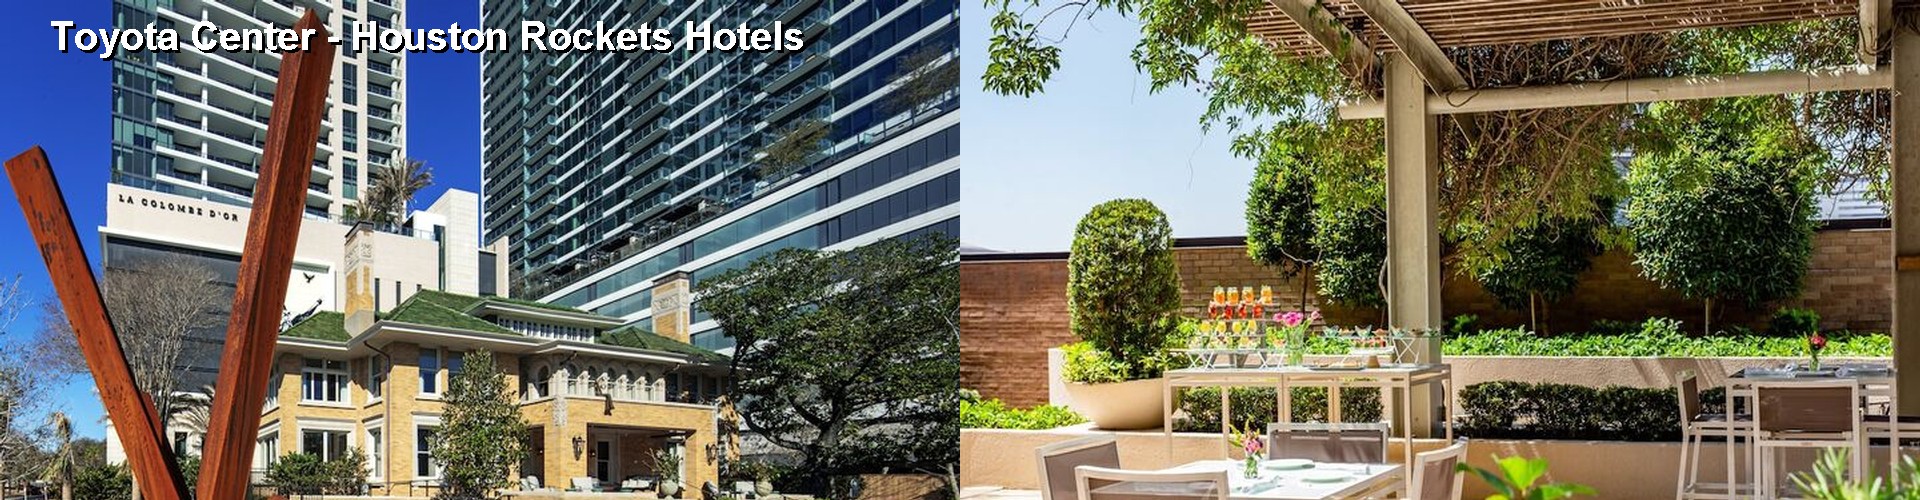 5 Best Hotels near Toyota Center - Houston Rockets